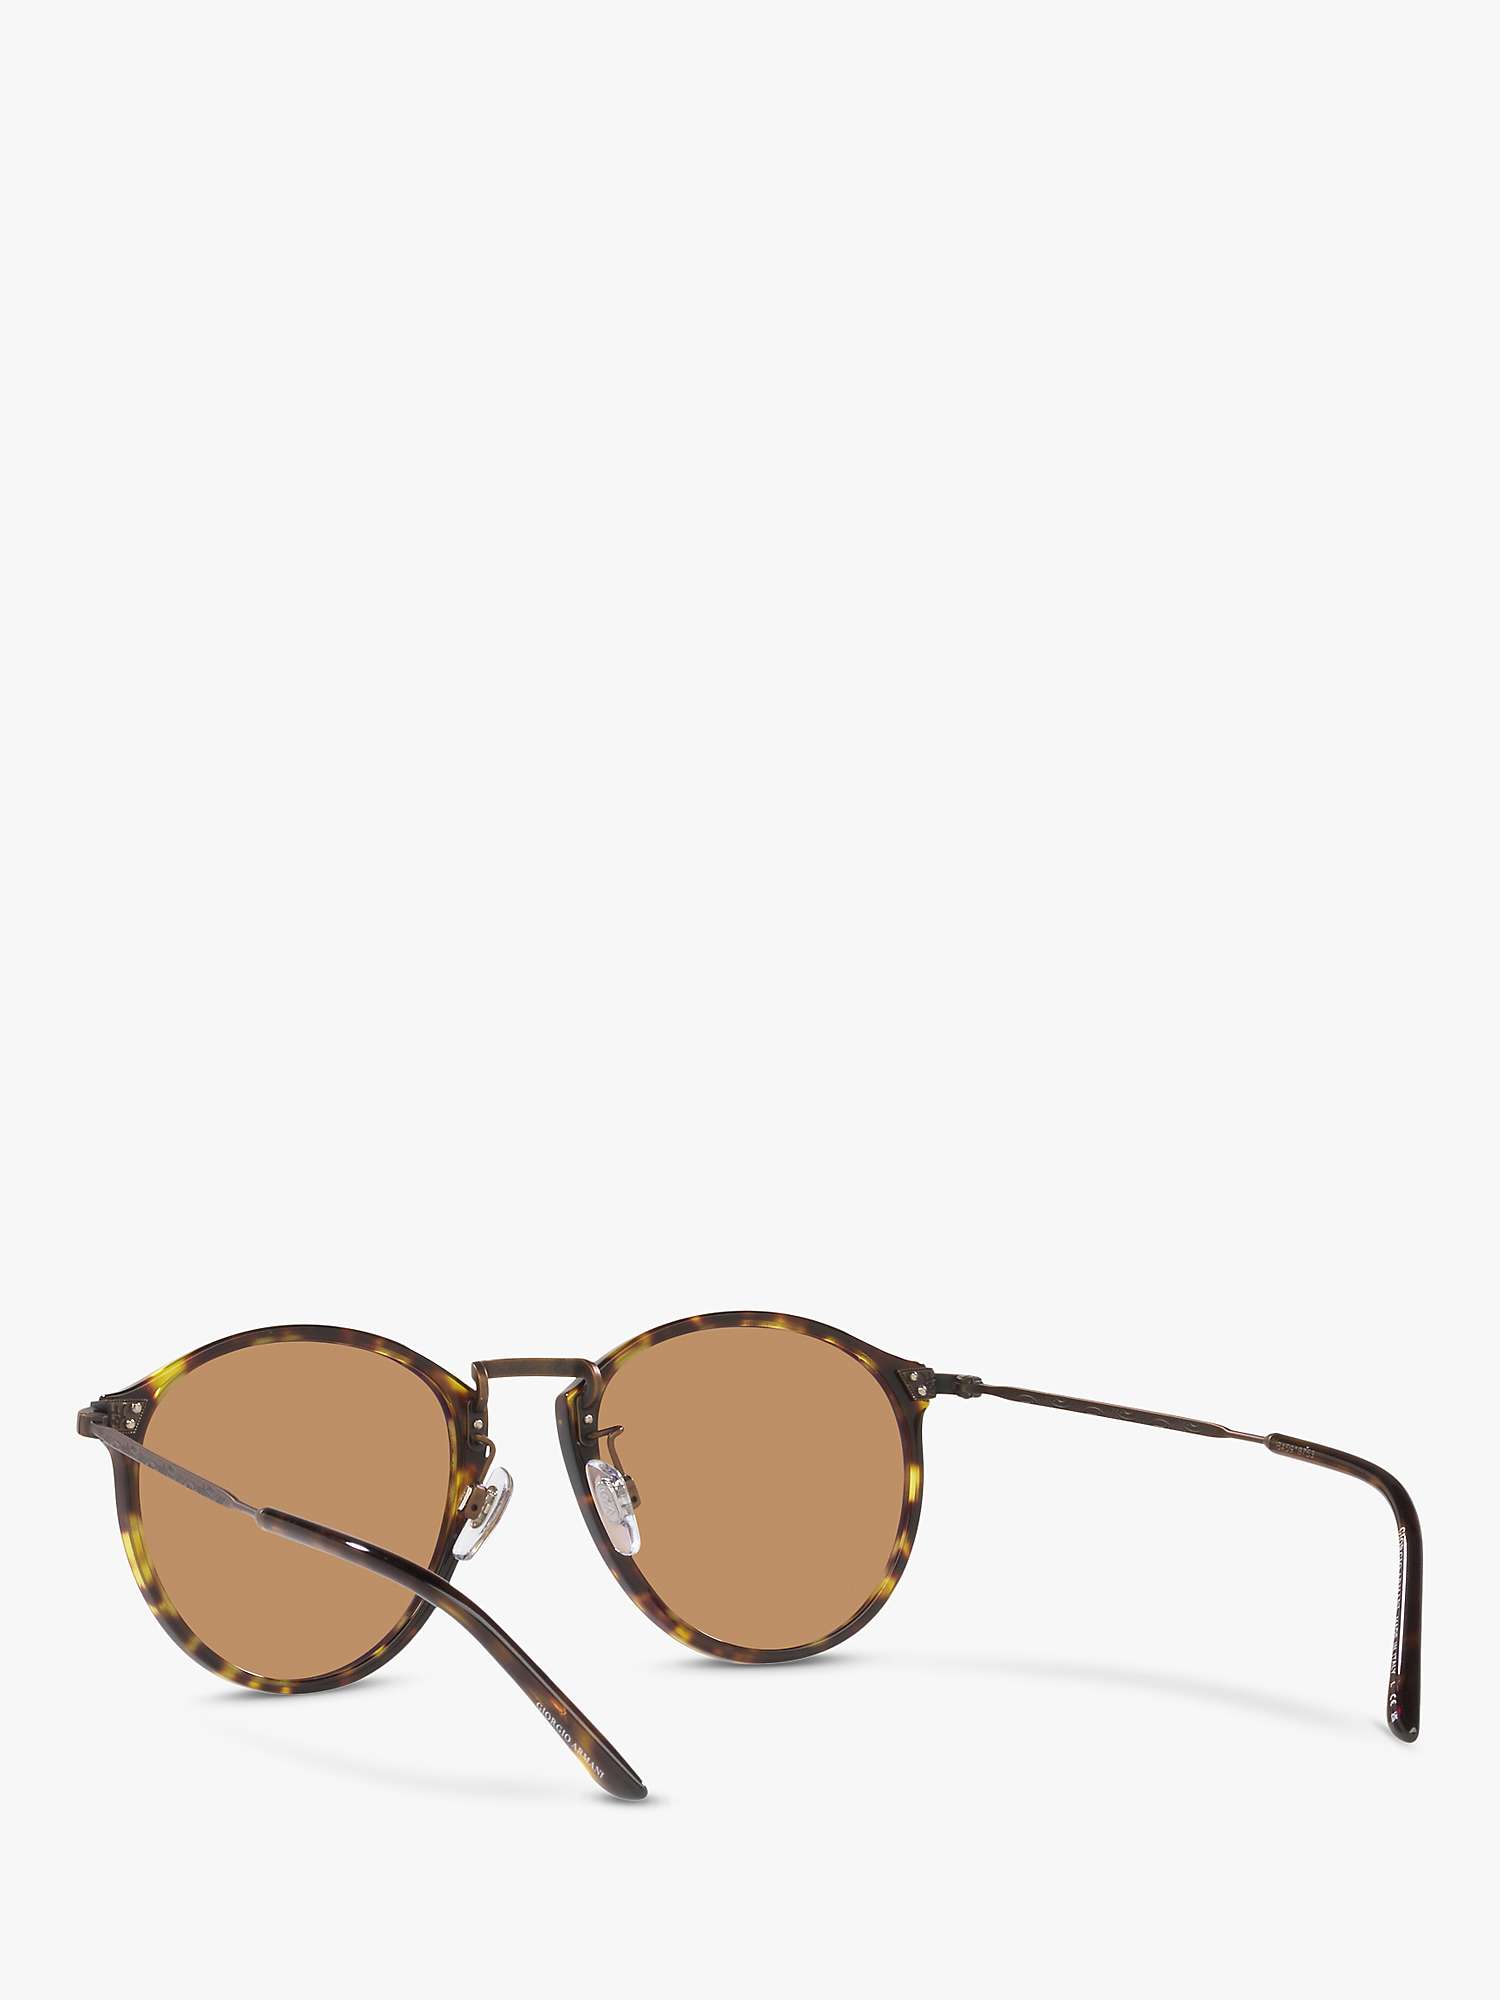 Buy Giorgio Armani AR 318SM Men's Oval Sunglasses, Tortoise/Brown Online at johnlewis.com